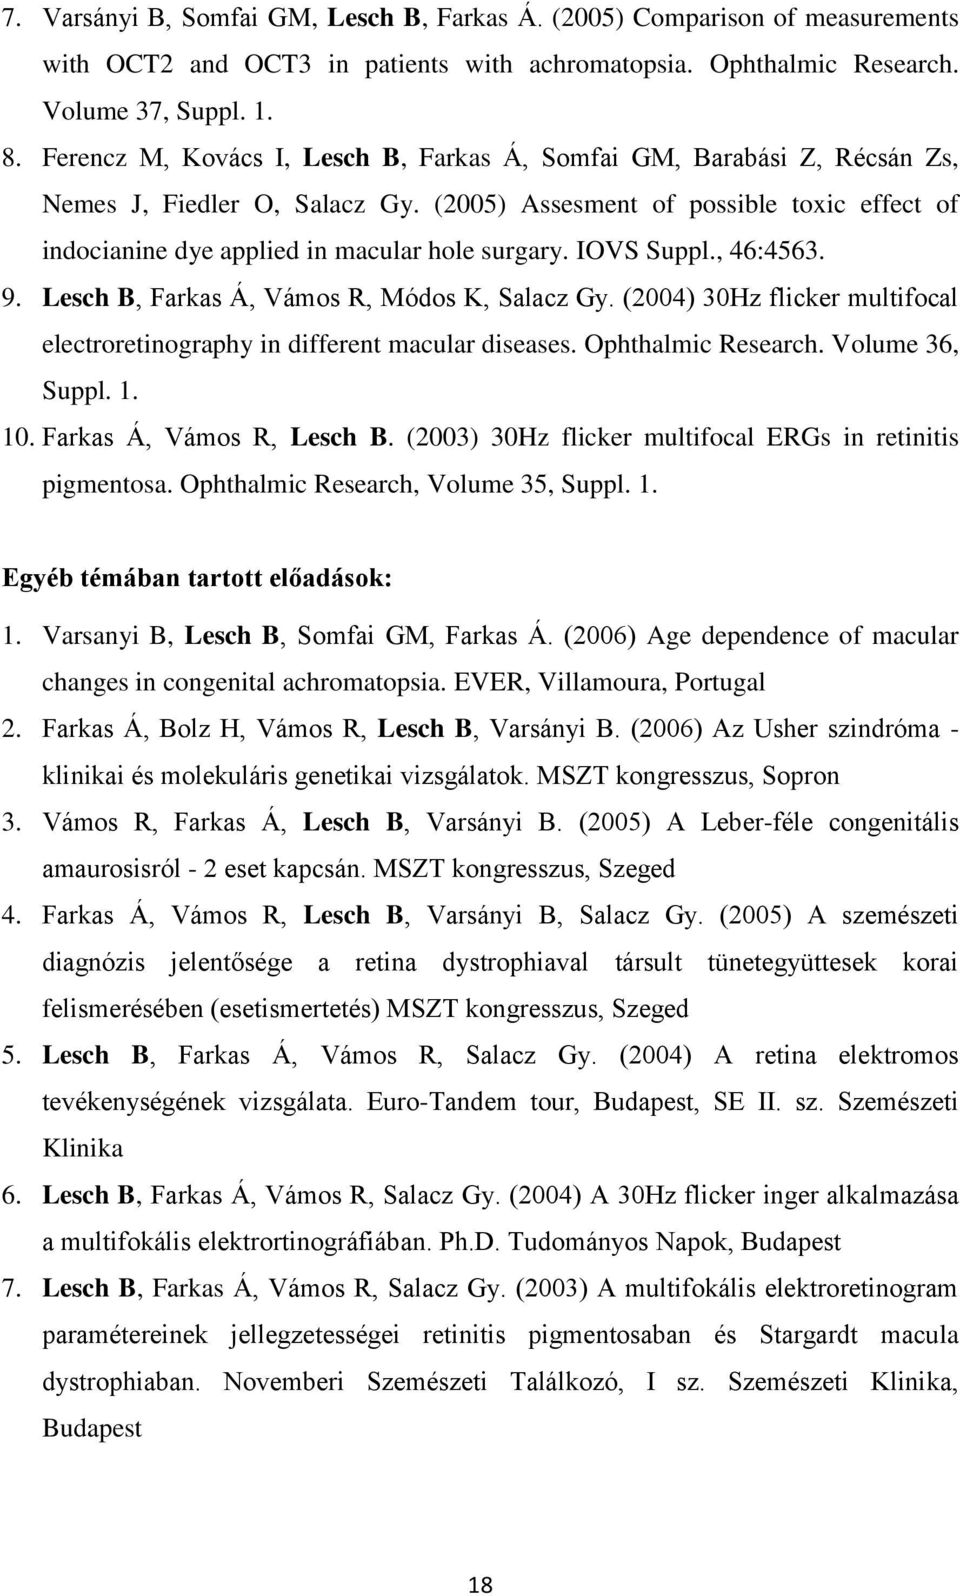 IOVS Suppl., 46:4563. 9. Lesch B, Farkas Á, Vámos R, Módos K, Salacz Gy. (2004) 30Hz flicker multifocal electroretinography in different macular diseases. Ophthalmic Research. Volume 36, Suppl. 1. 10.